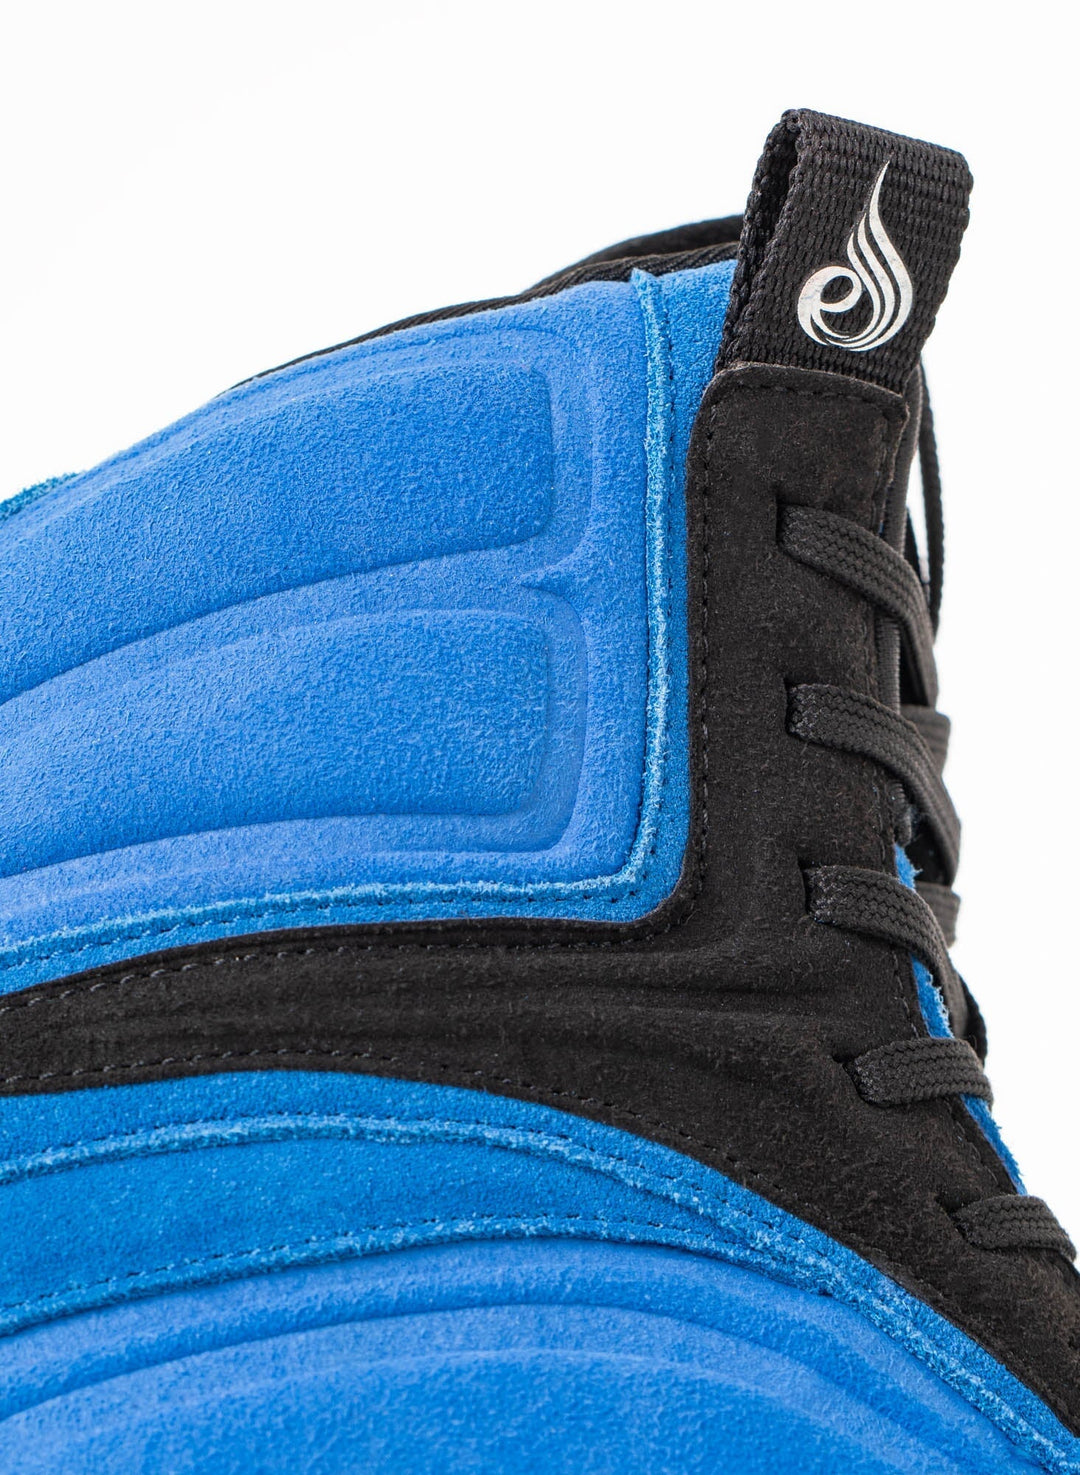 D-Mak 3 - Blue Shoes Ryderwear 